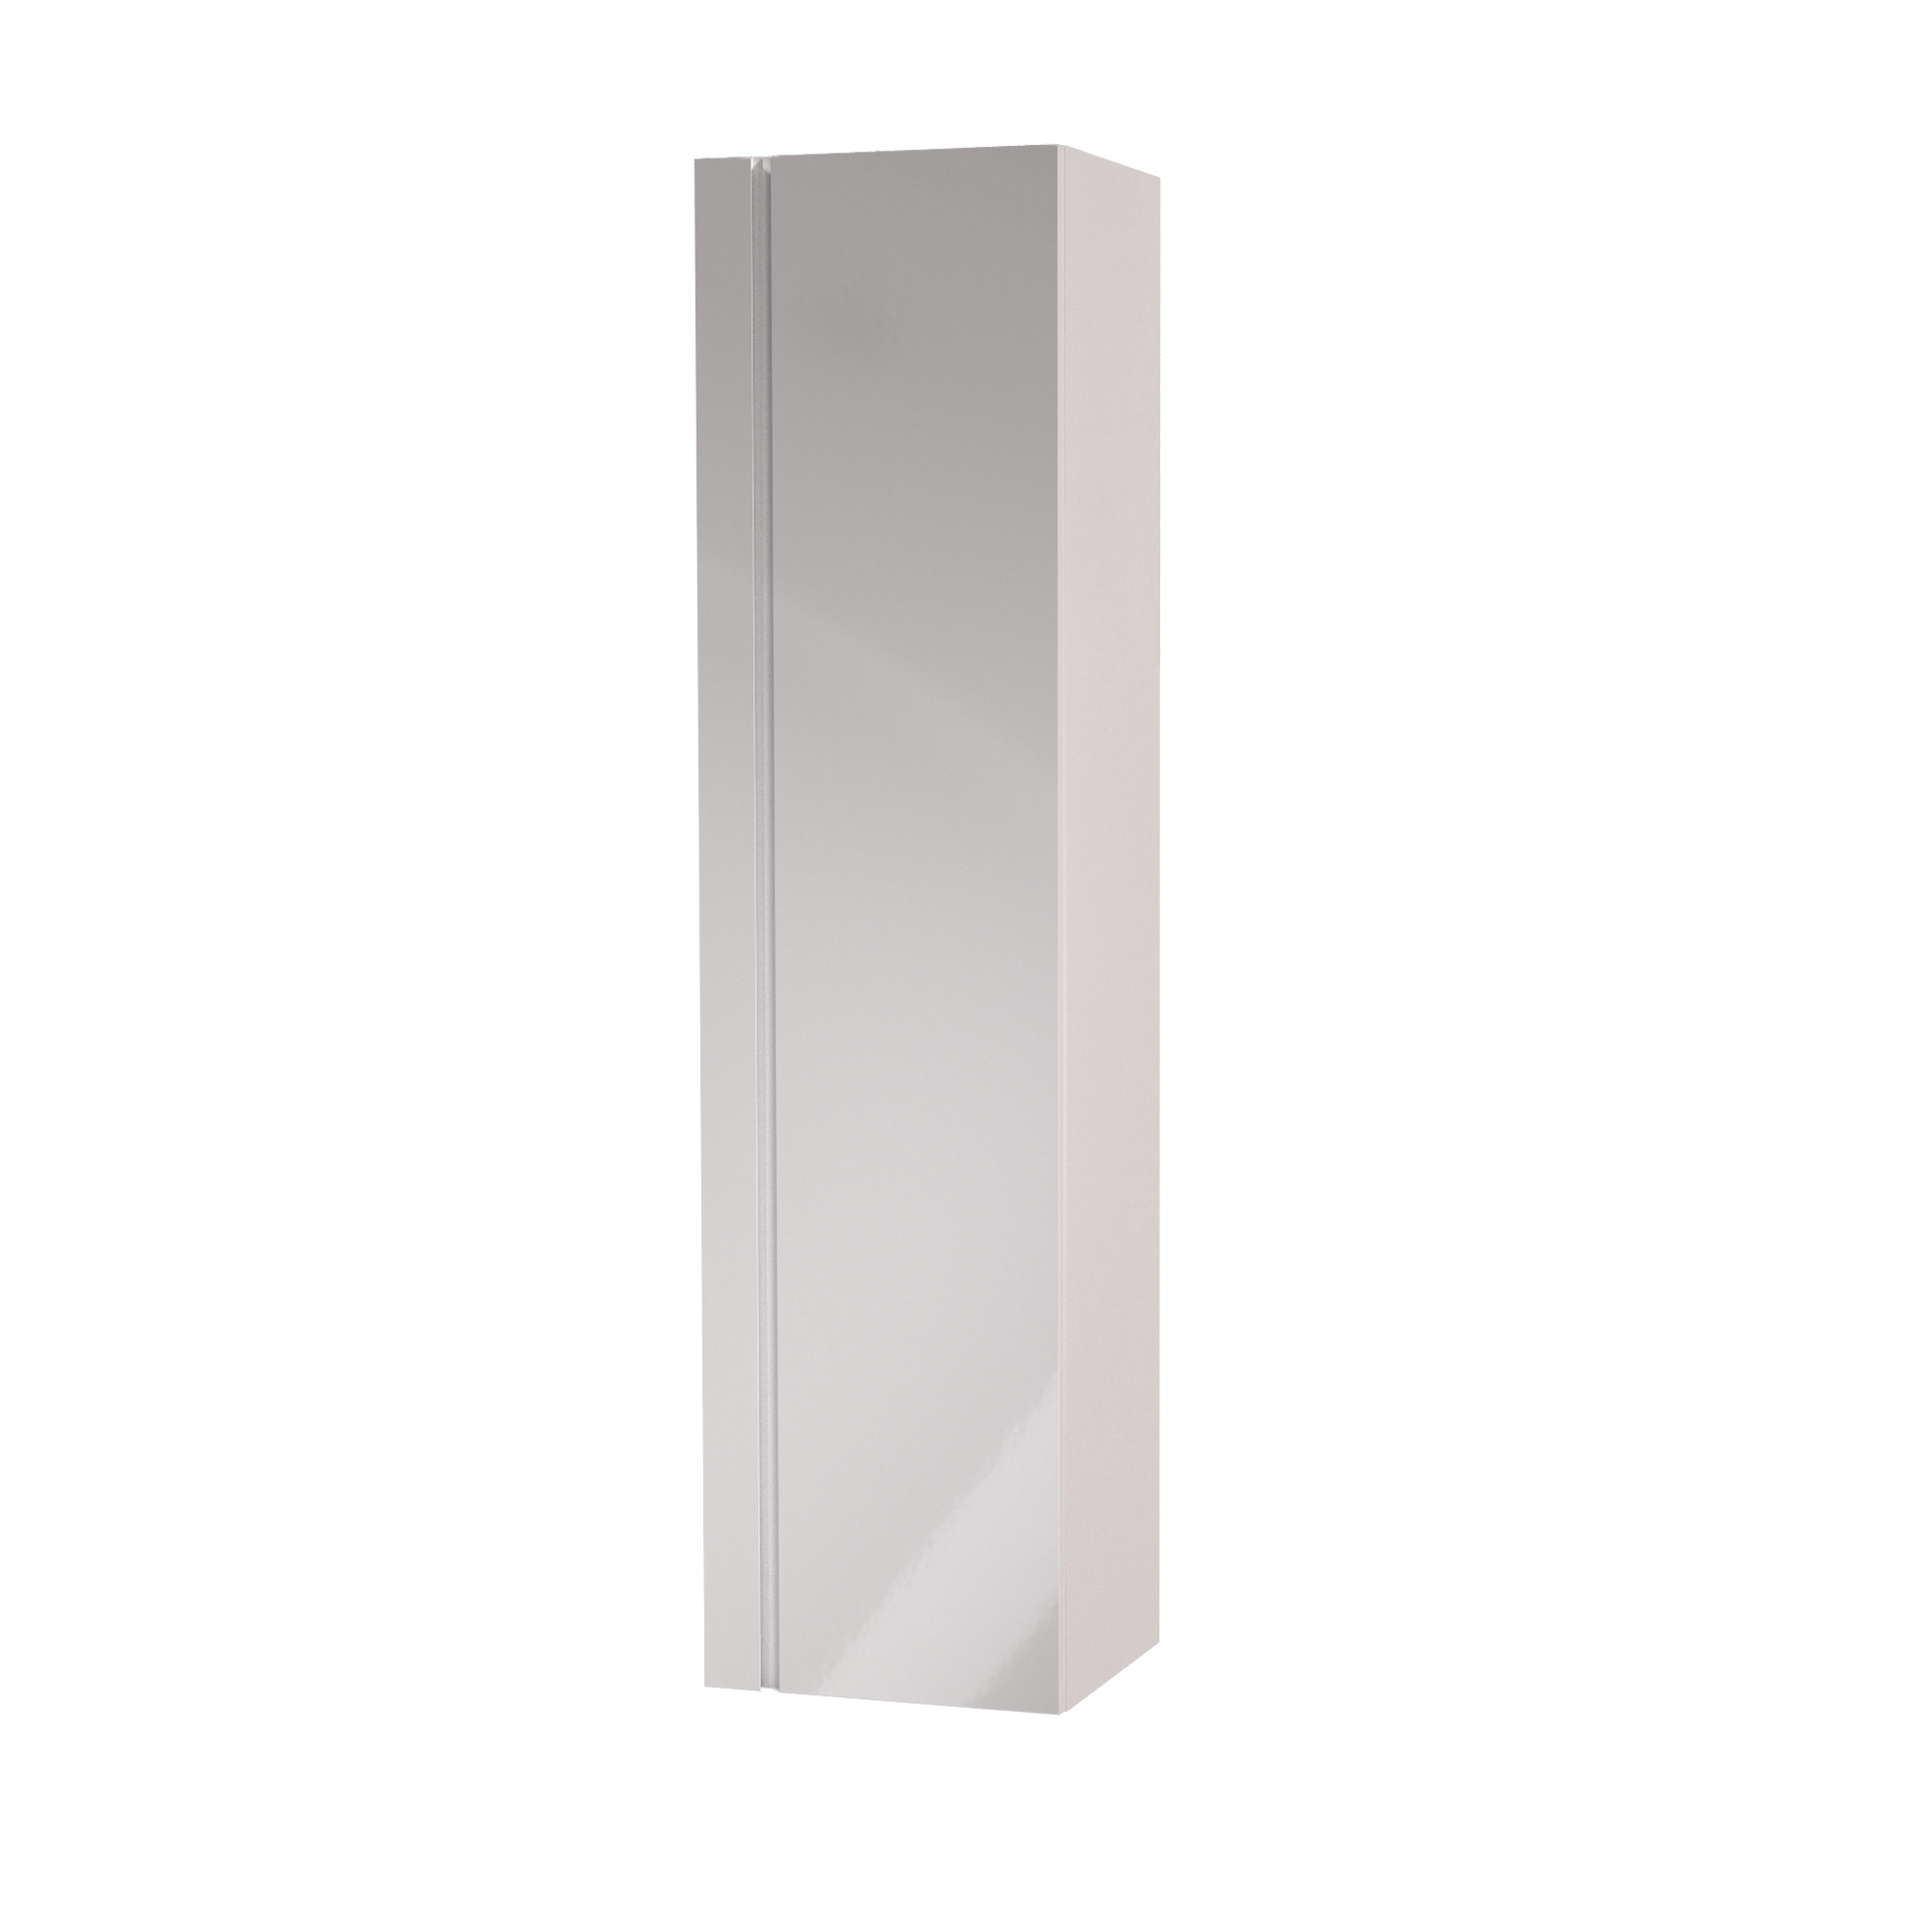 Matteo 120cm wall unit - white 1-door handless